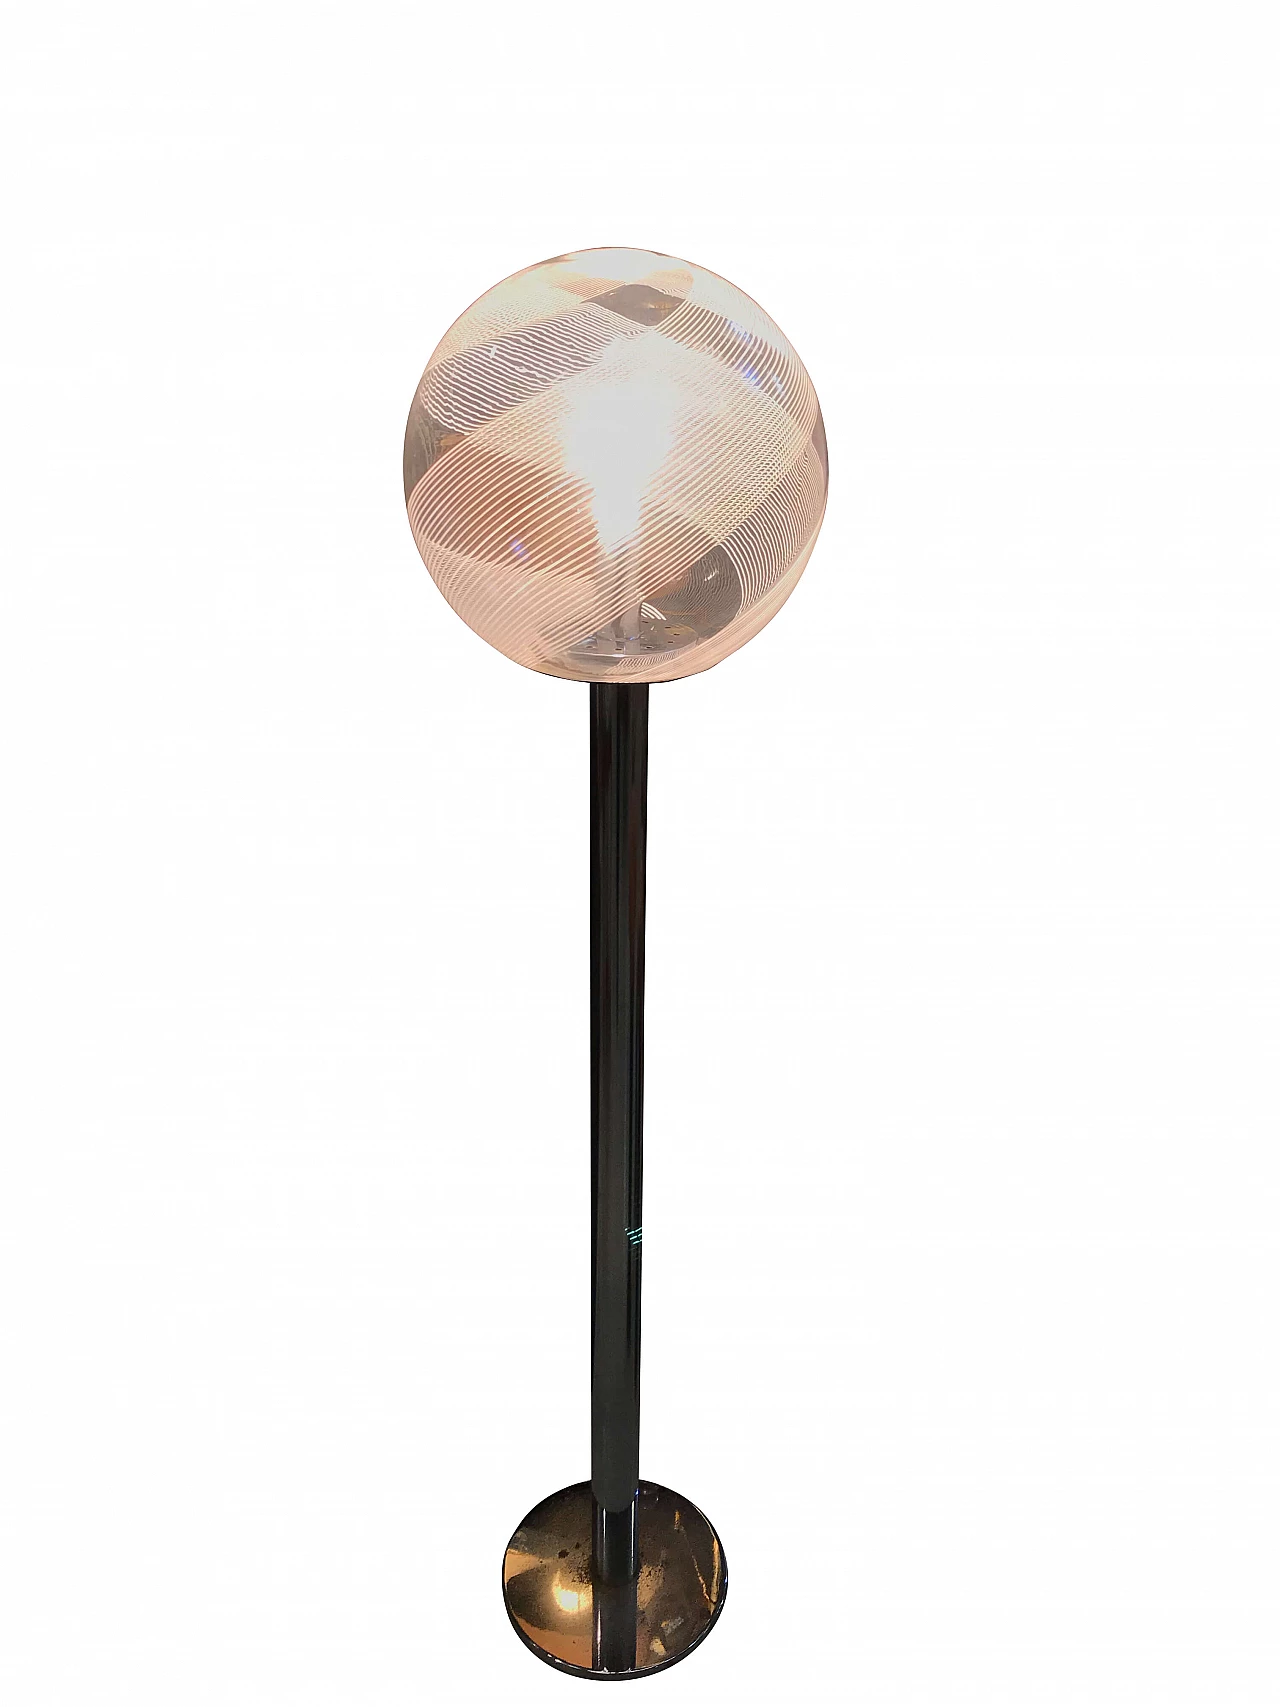 Sphere lamp "Fabric" by Venini 1074559